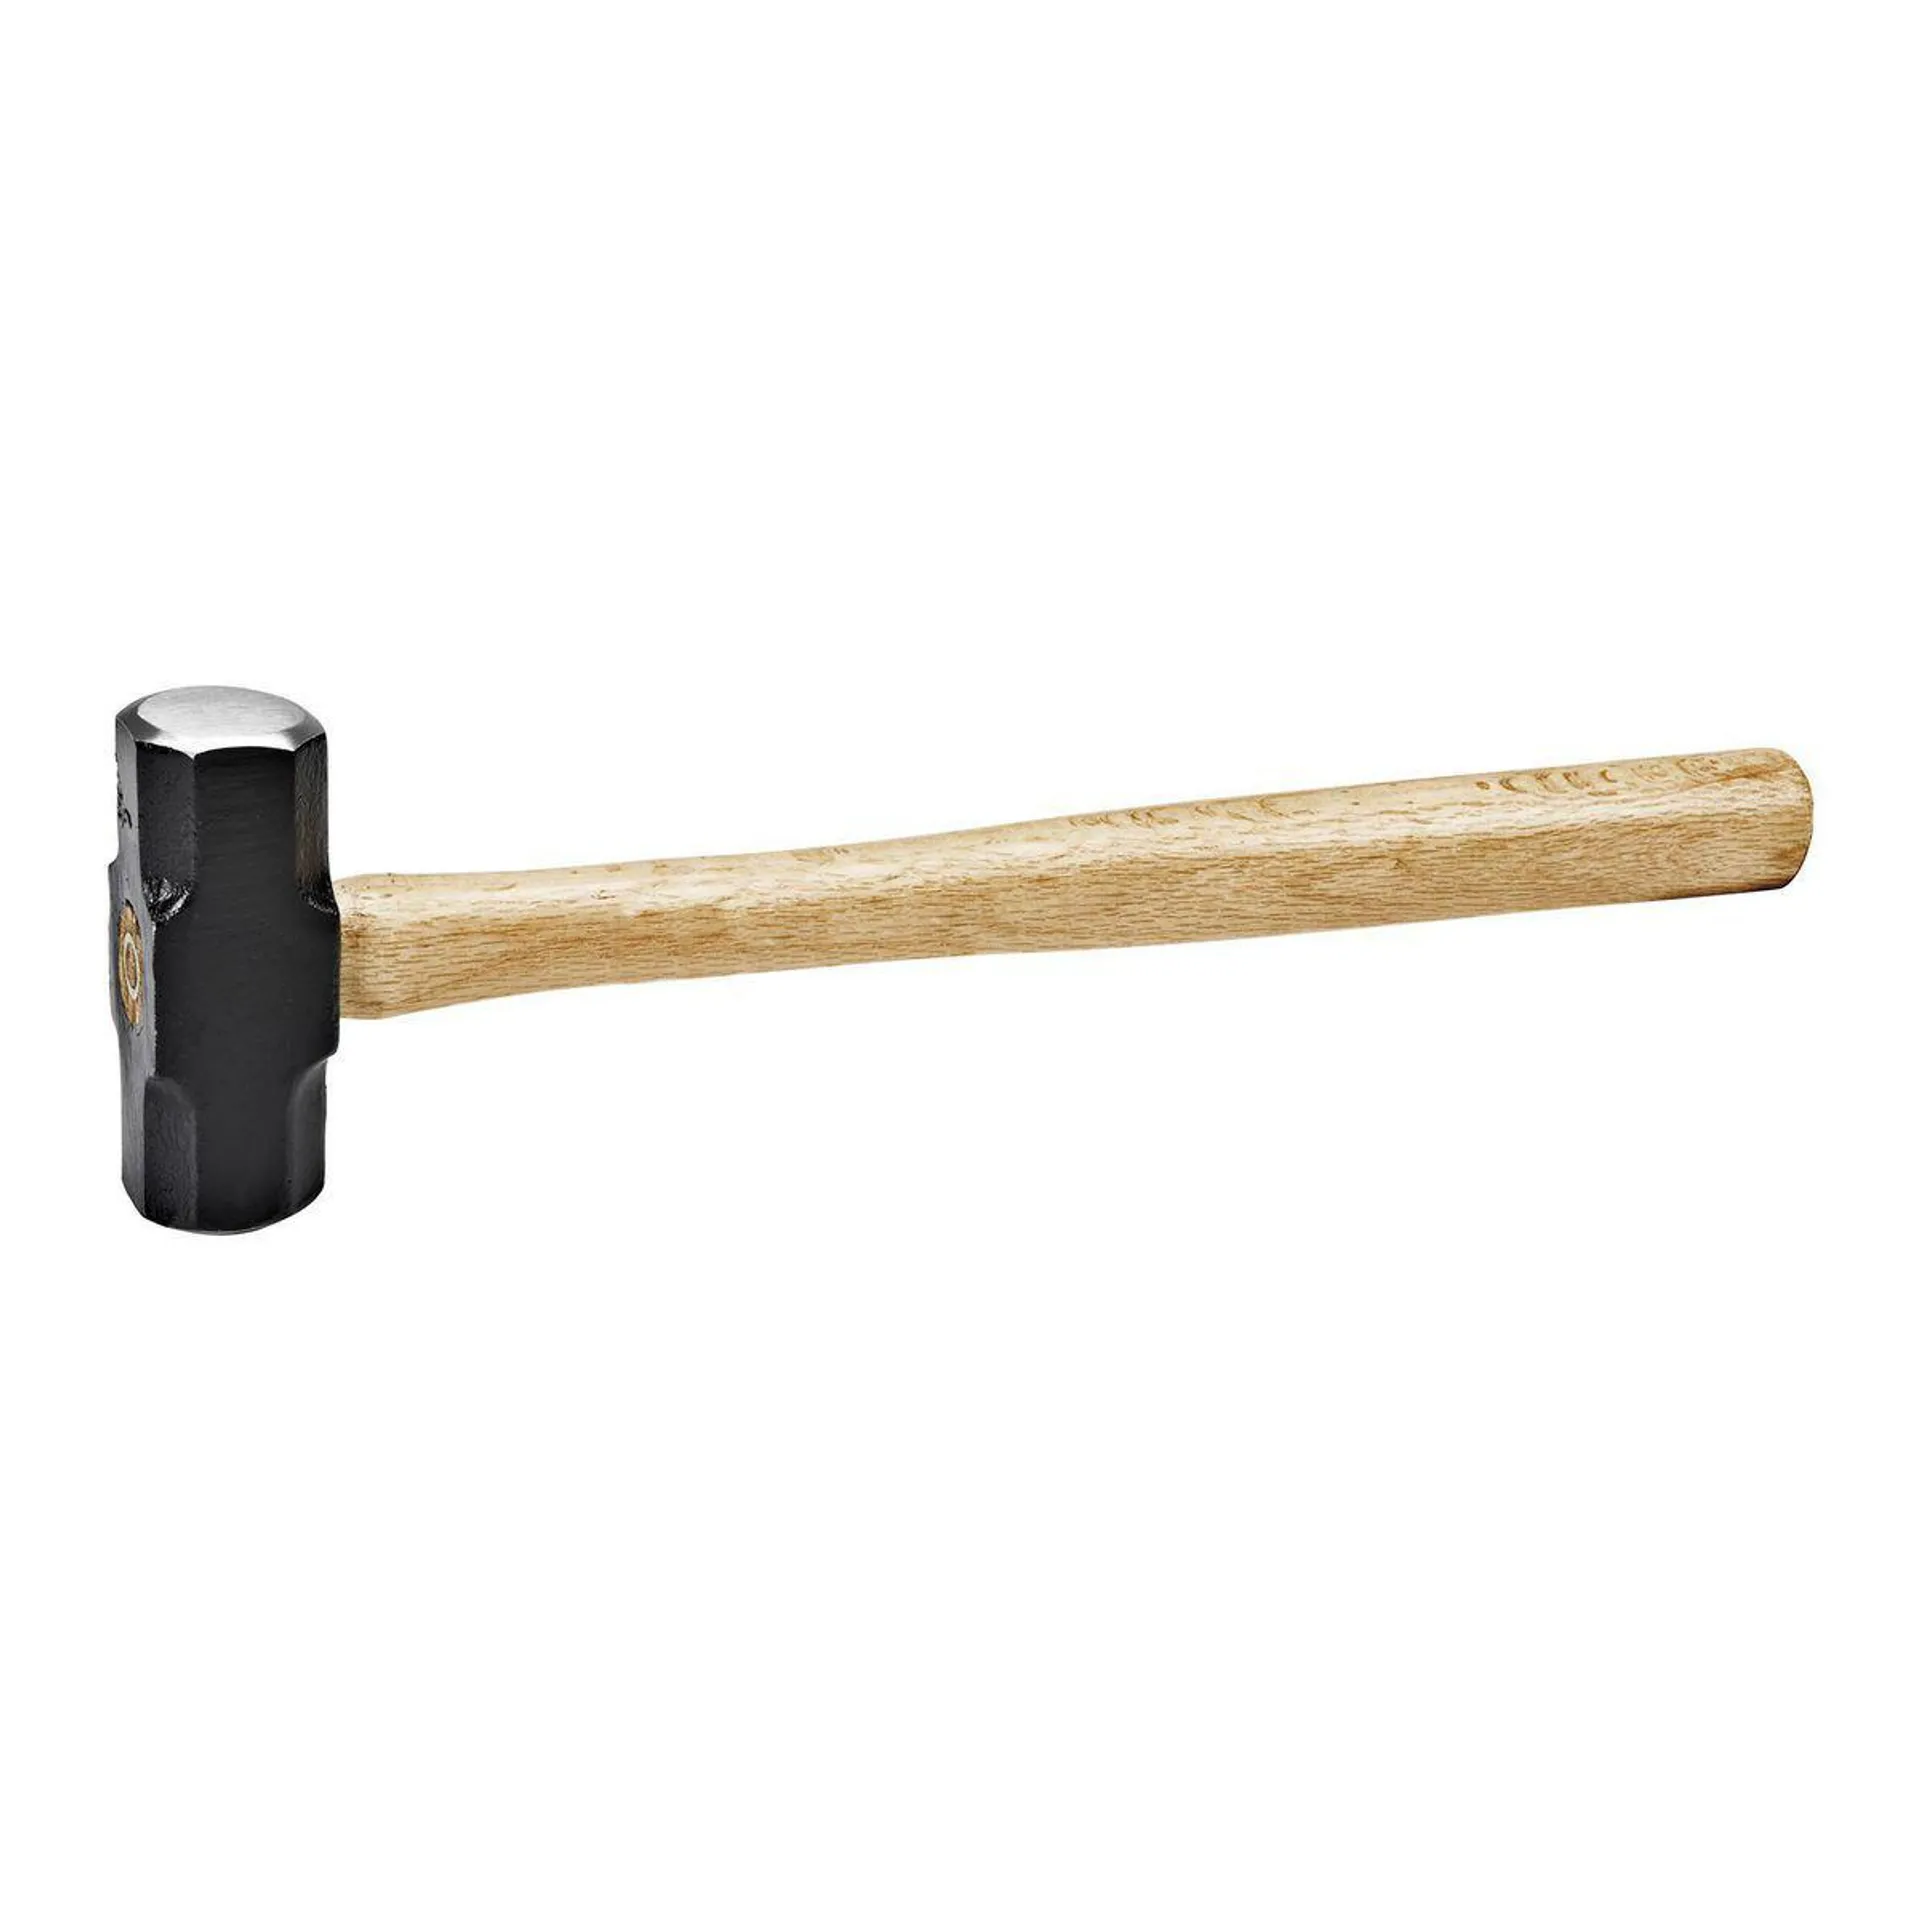 2 lb. Hardwood Engineers Hammer